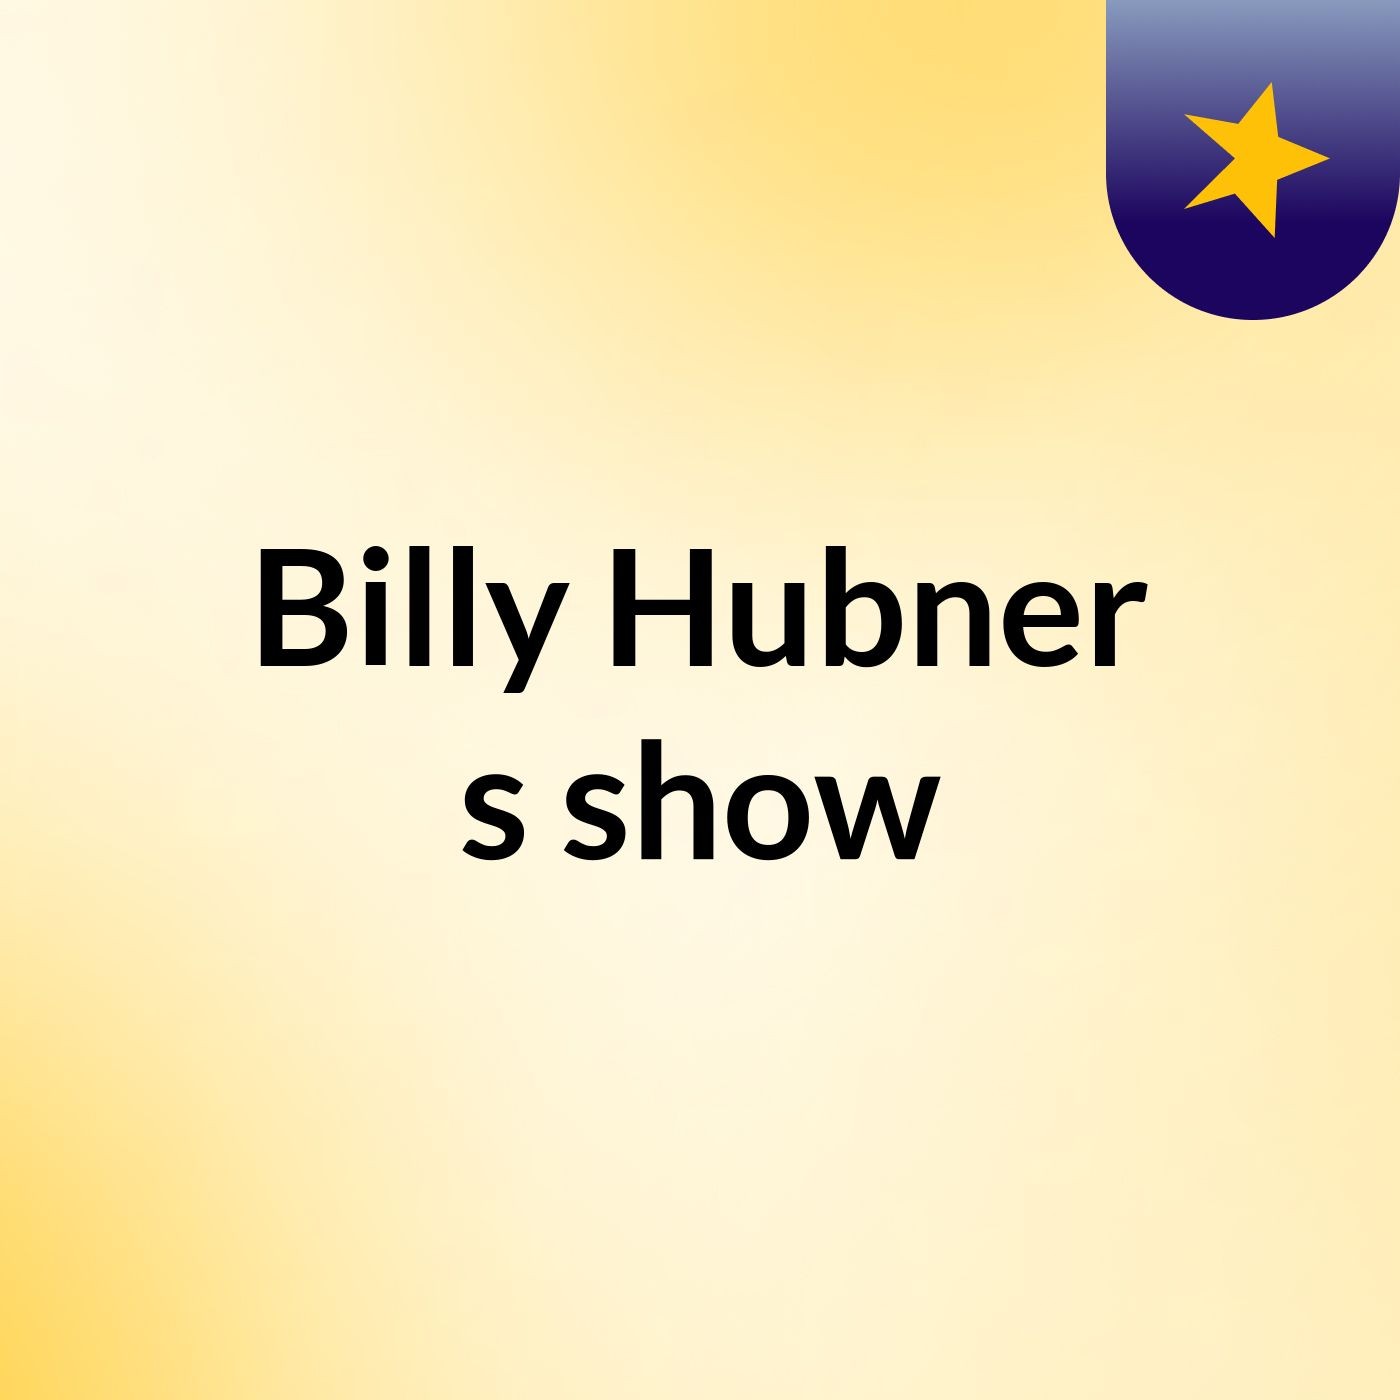 Episode 5 - Billy Hubner's show